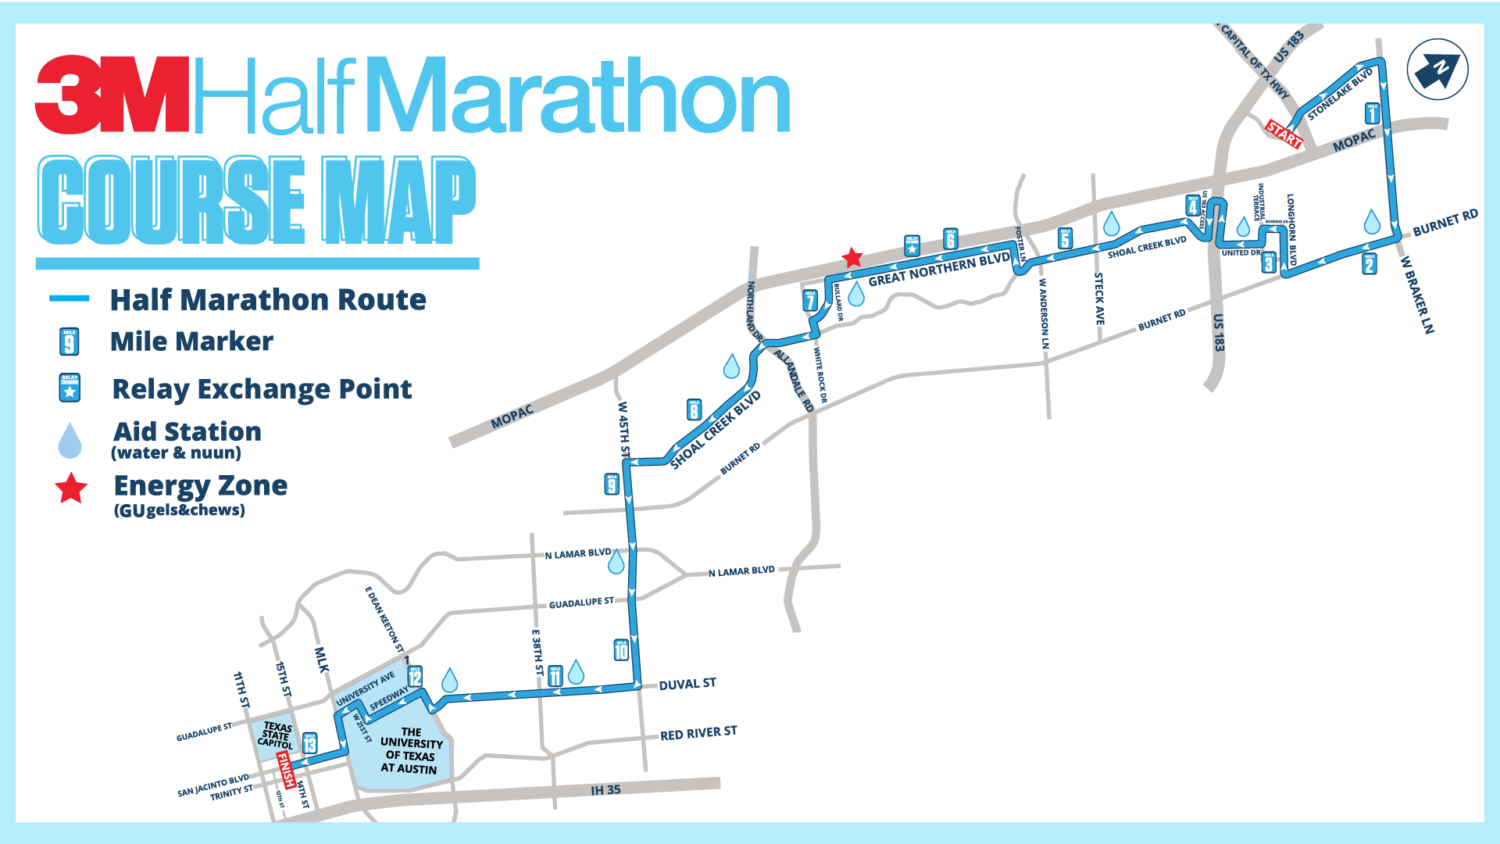 Course & Elevation - 3M Half Marathon